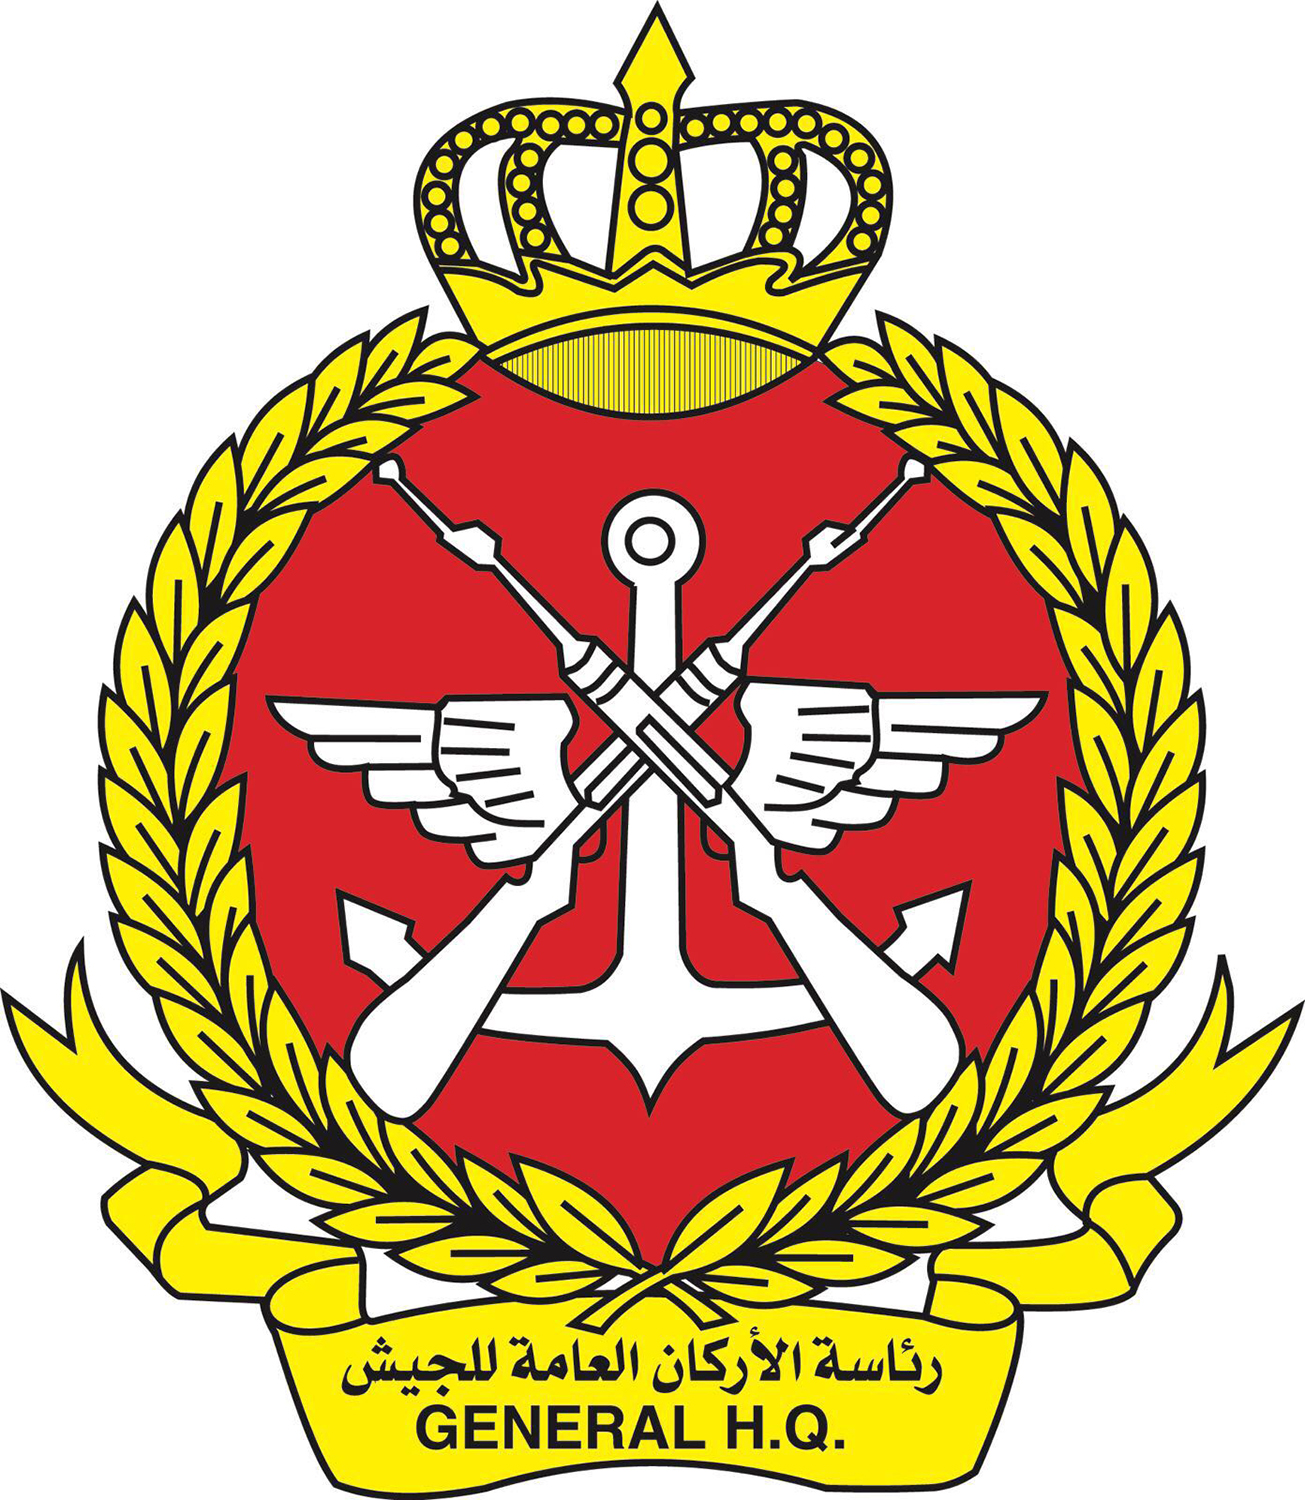 The Kuwaiti Army General Staff